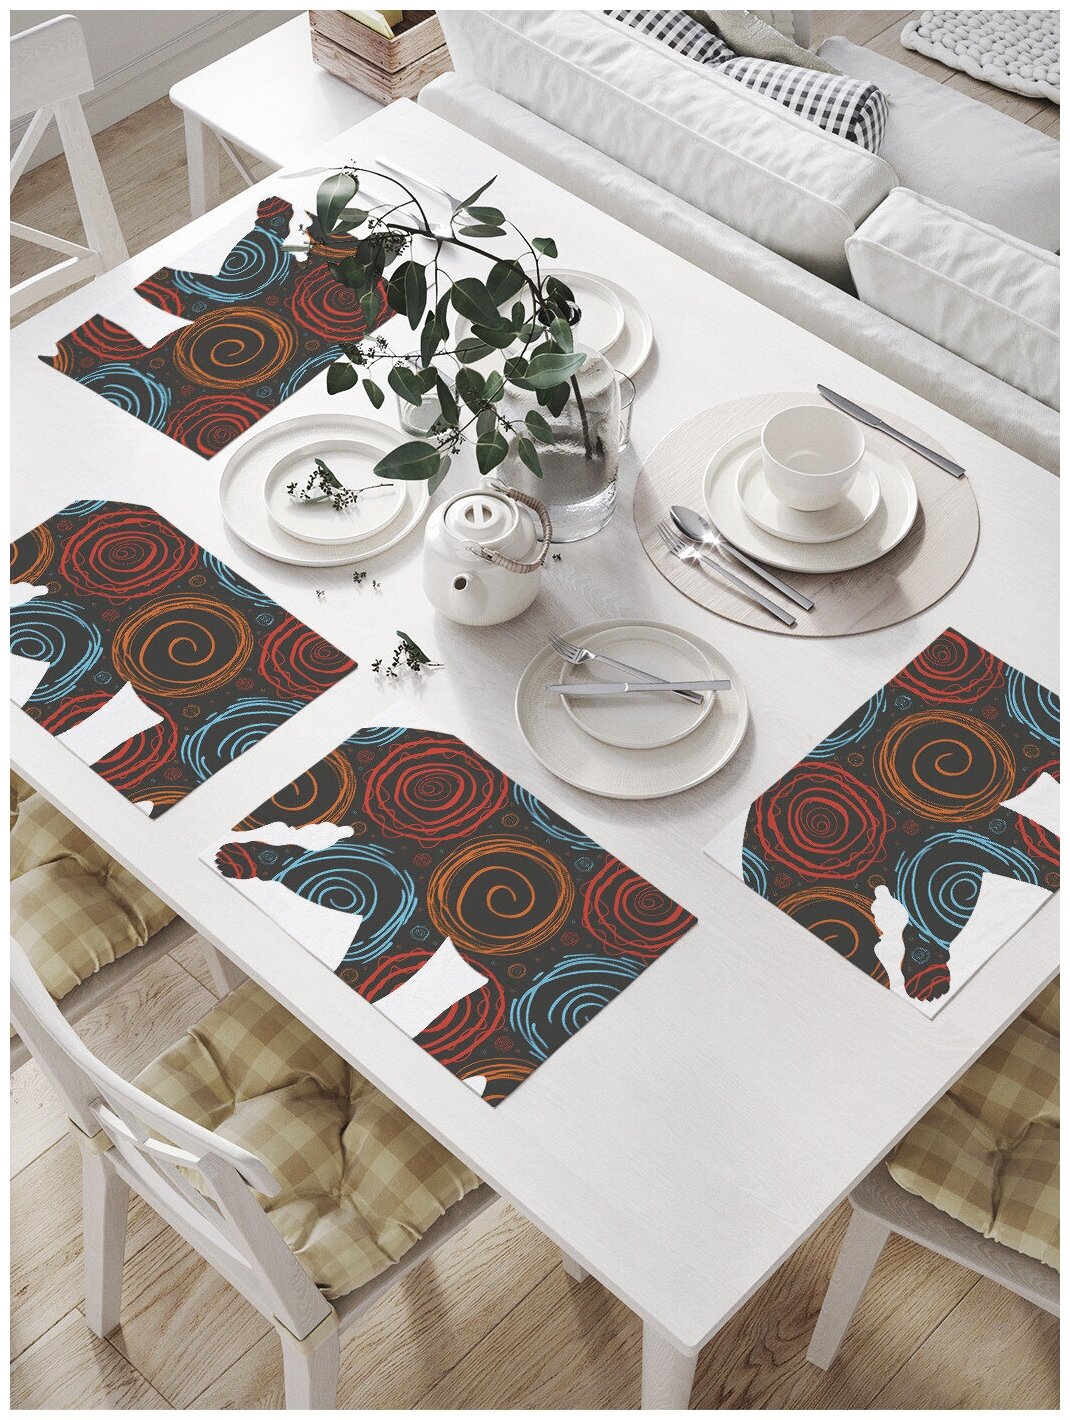 Комплект салфеток JoyArty "Медведь с орнаментом" для сервировки стола (32х46 см, 4 шт.)